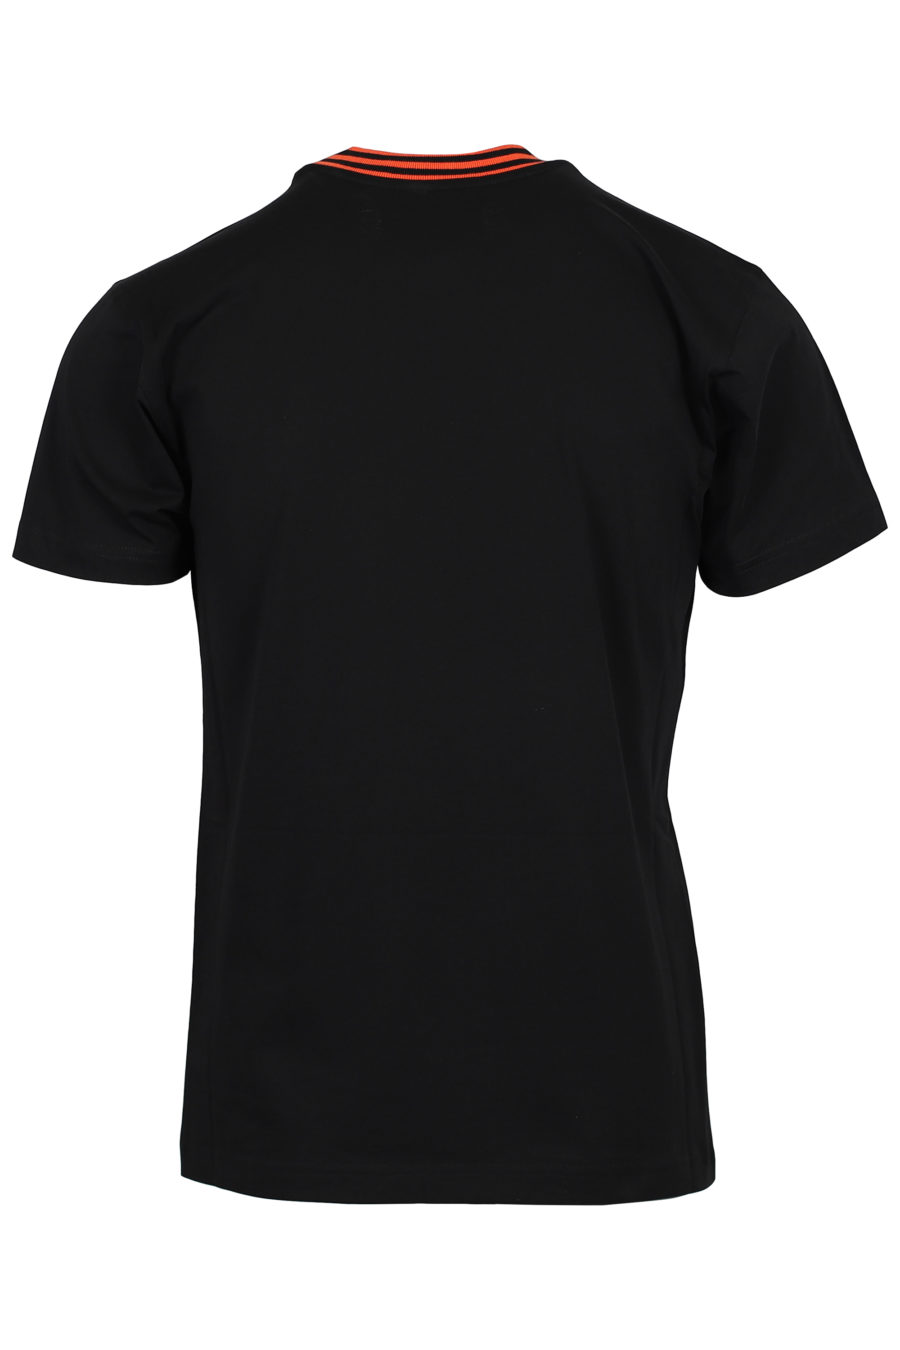 Camiseta negra con osito - IMG 2045